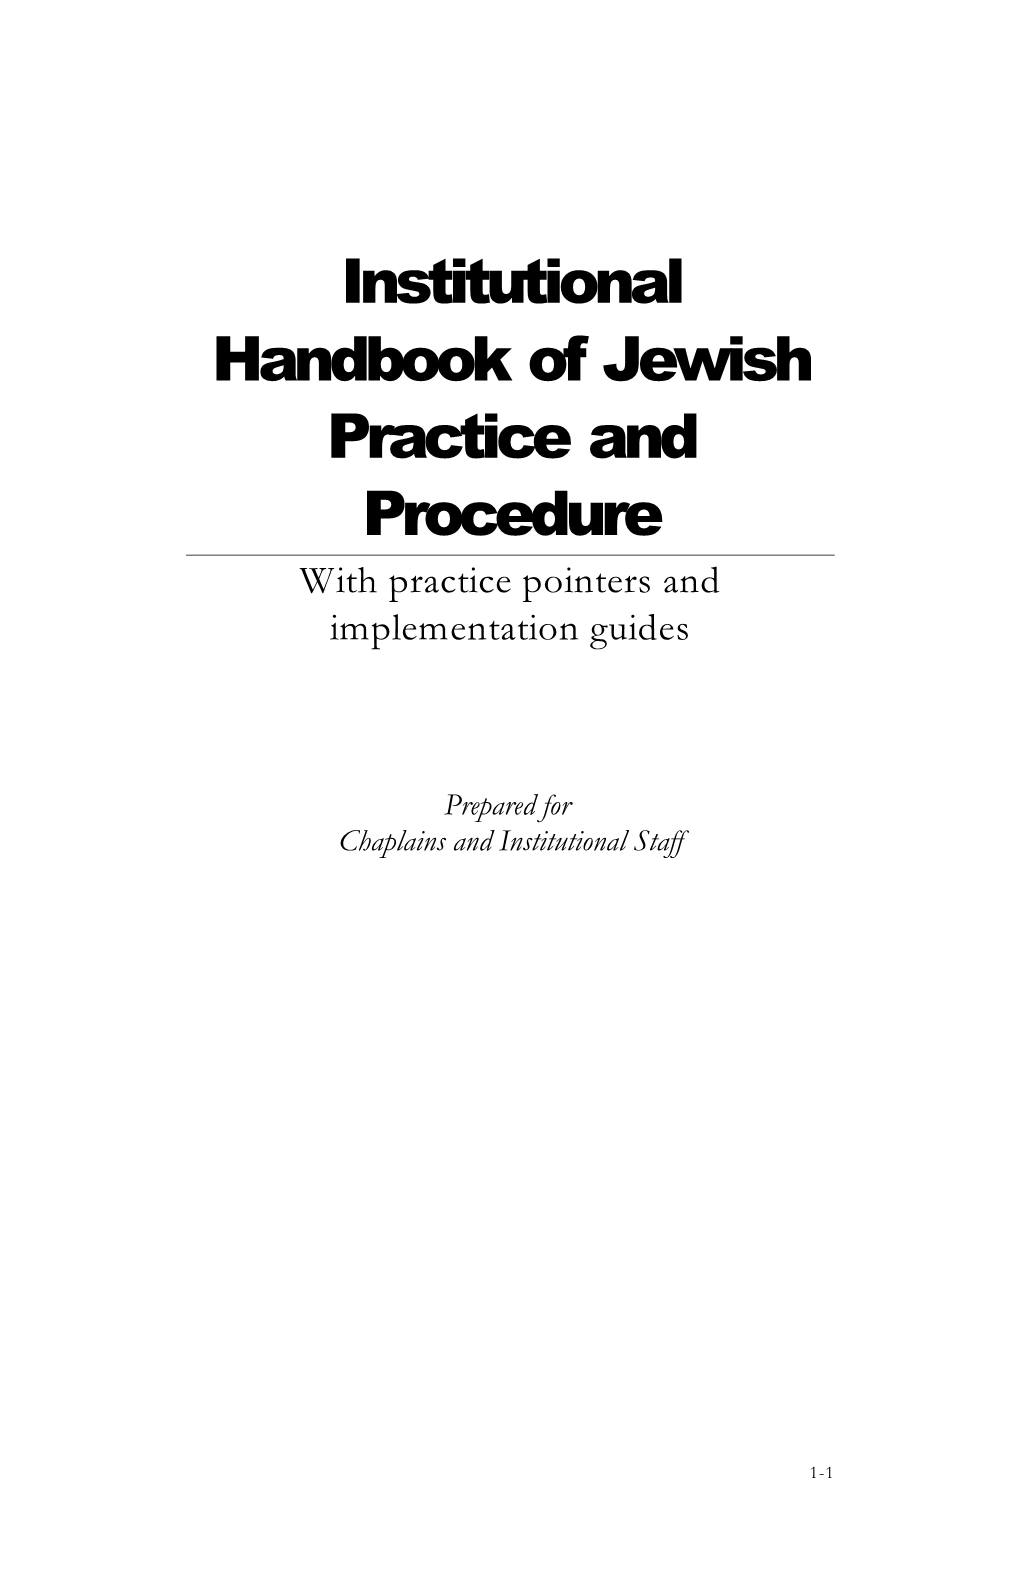 Institutional Handbook of Jewish Practices And